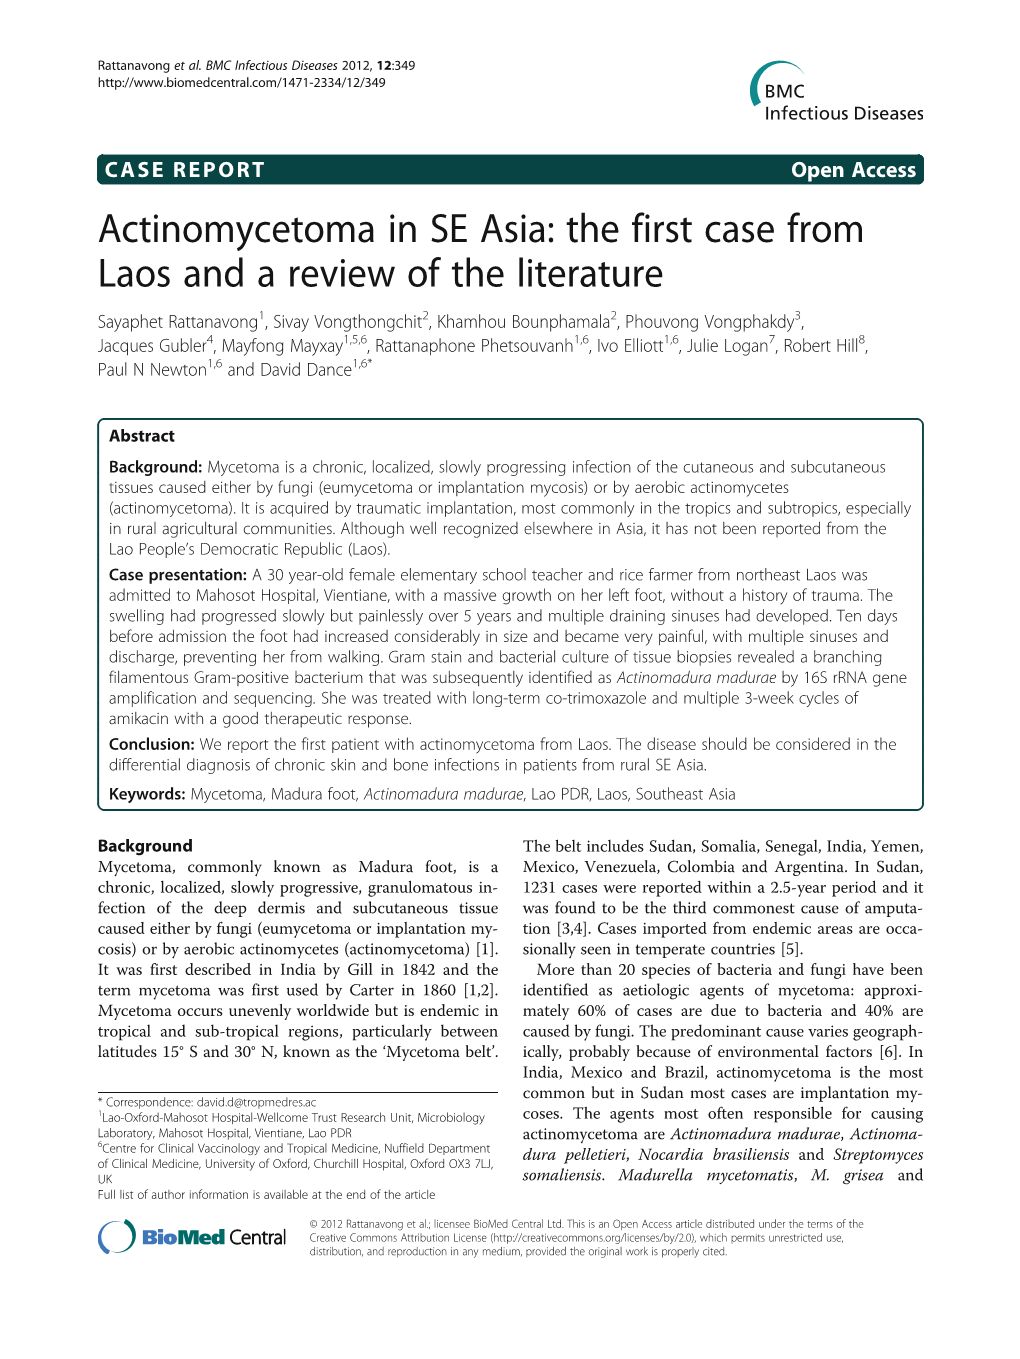 Actinomycetoma in SE Asia